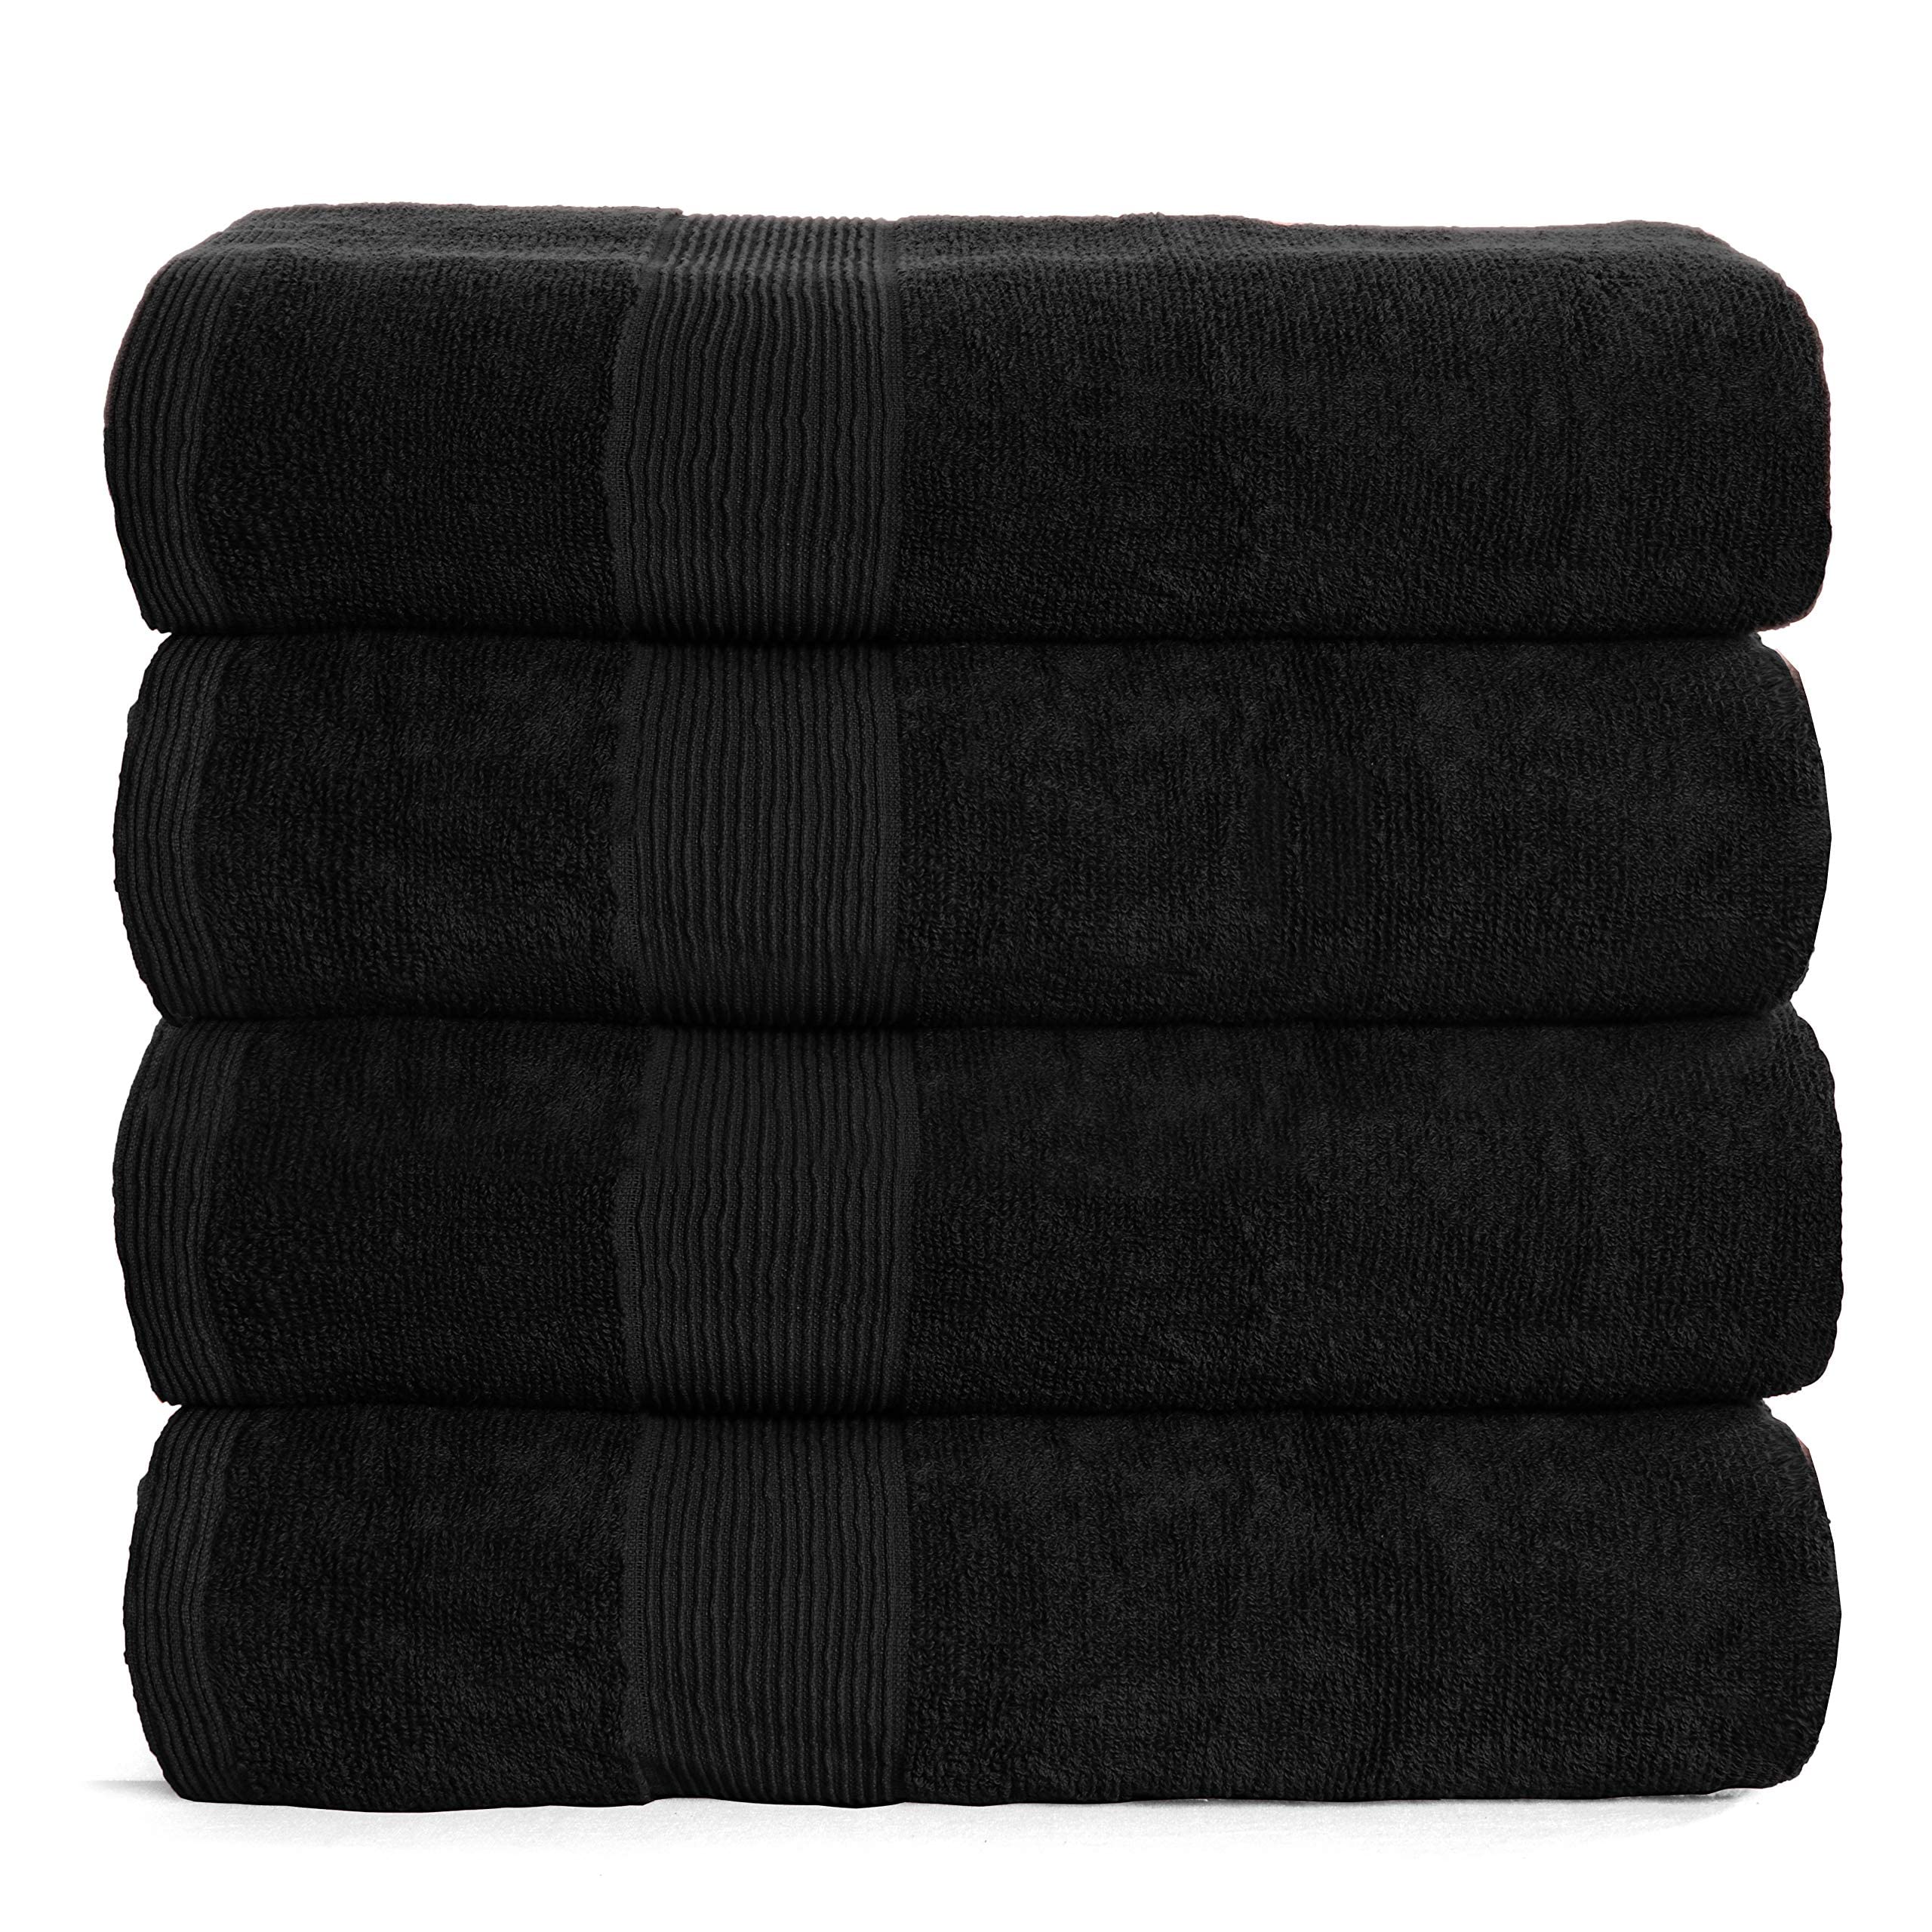 Elvana Home 4 Pack Bath Towel Set 27x54, 100% Ring Spun Cotton, Ultra Soft  Highly Absorbent Machine Washable Hotel Spa Quality for Bathroom, 4 Bath  Towels Black